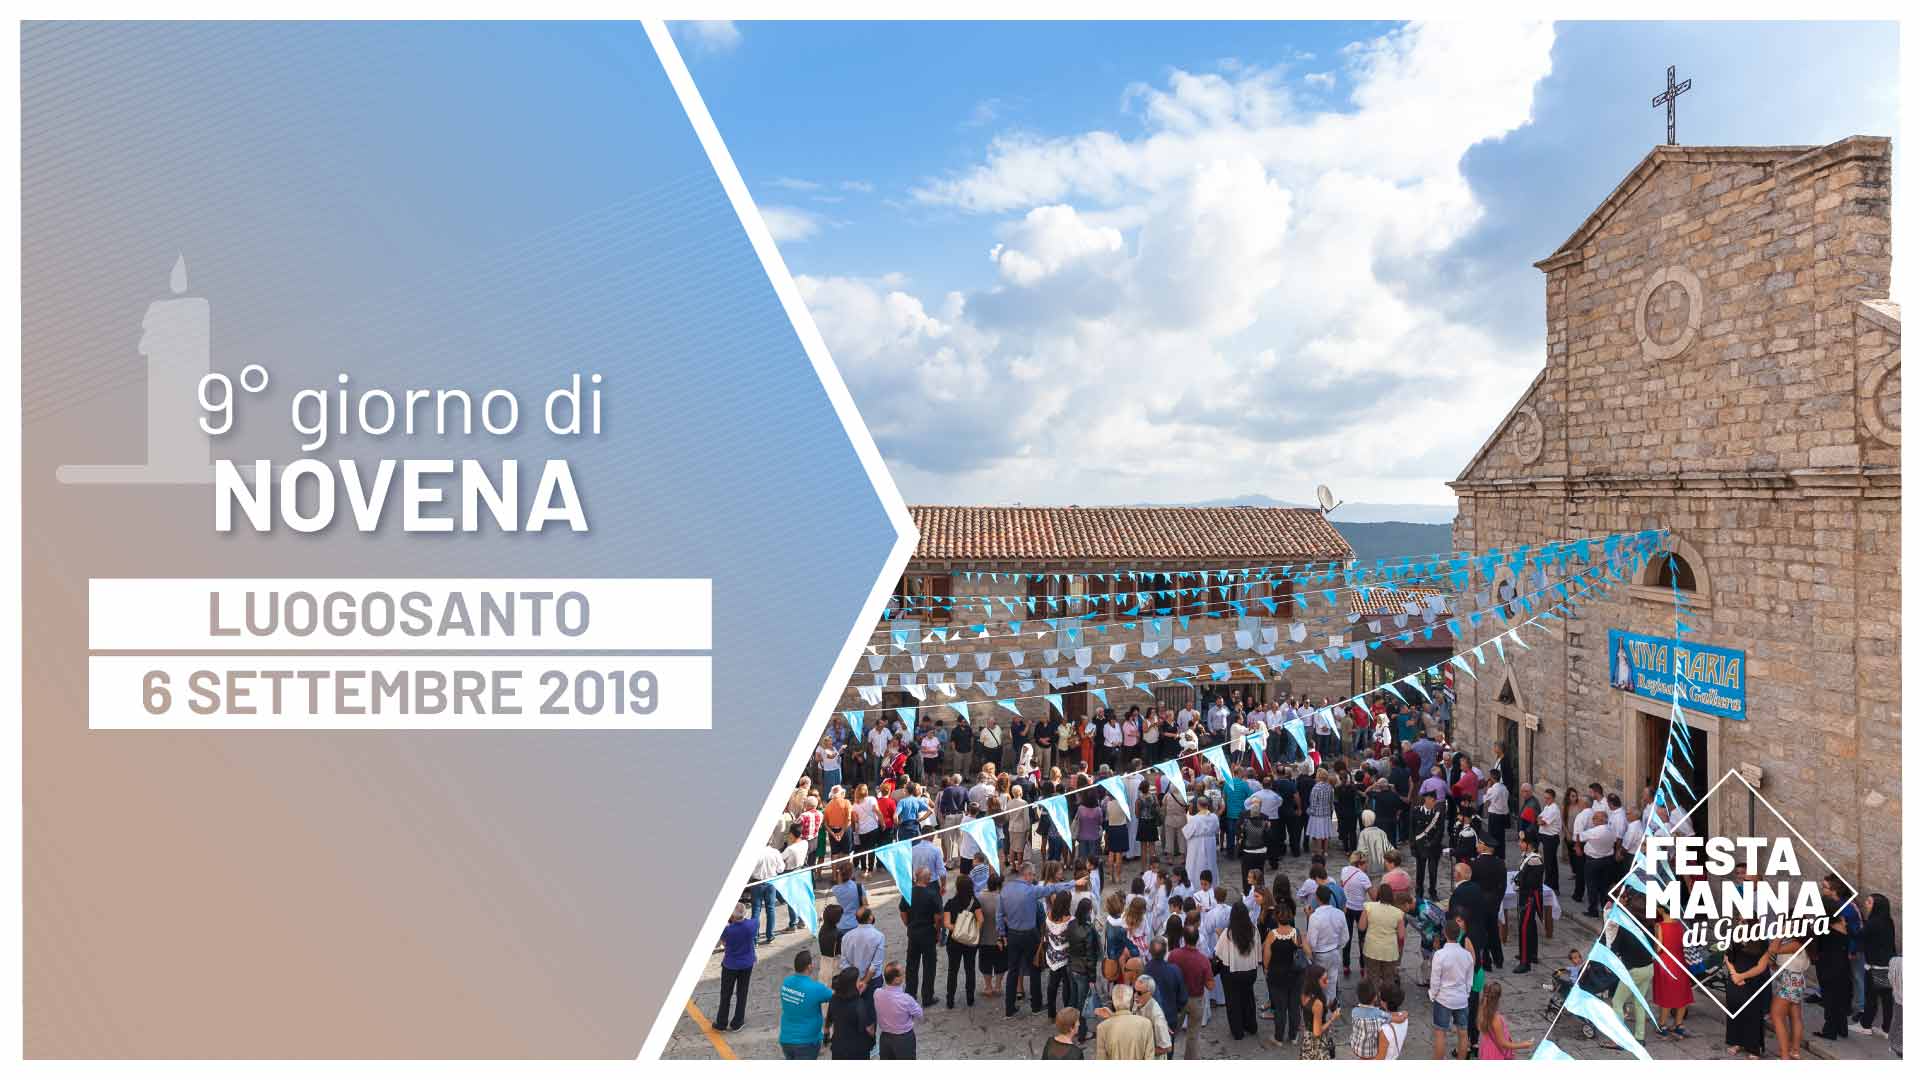 Ninth day of the novena | Festa Manna di Gaddura 2019